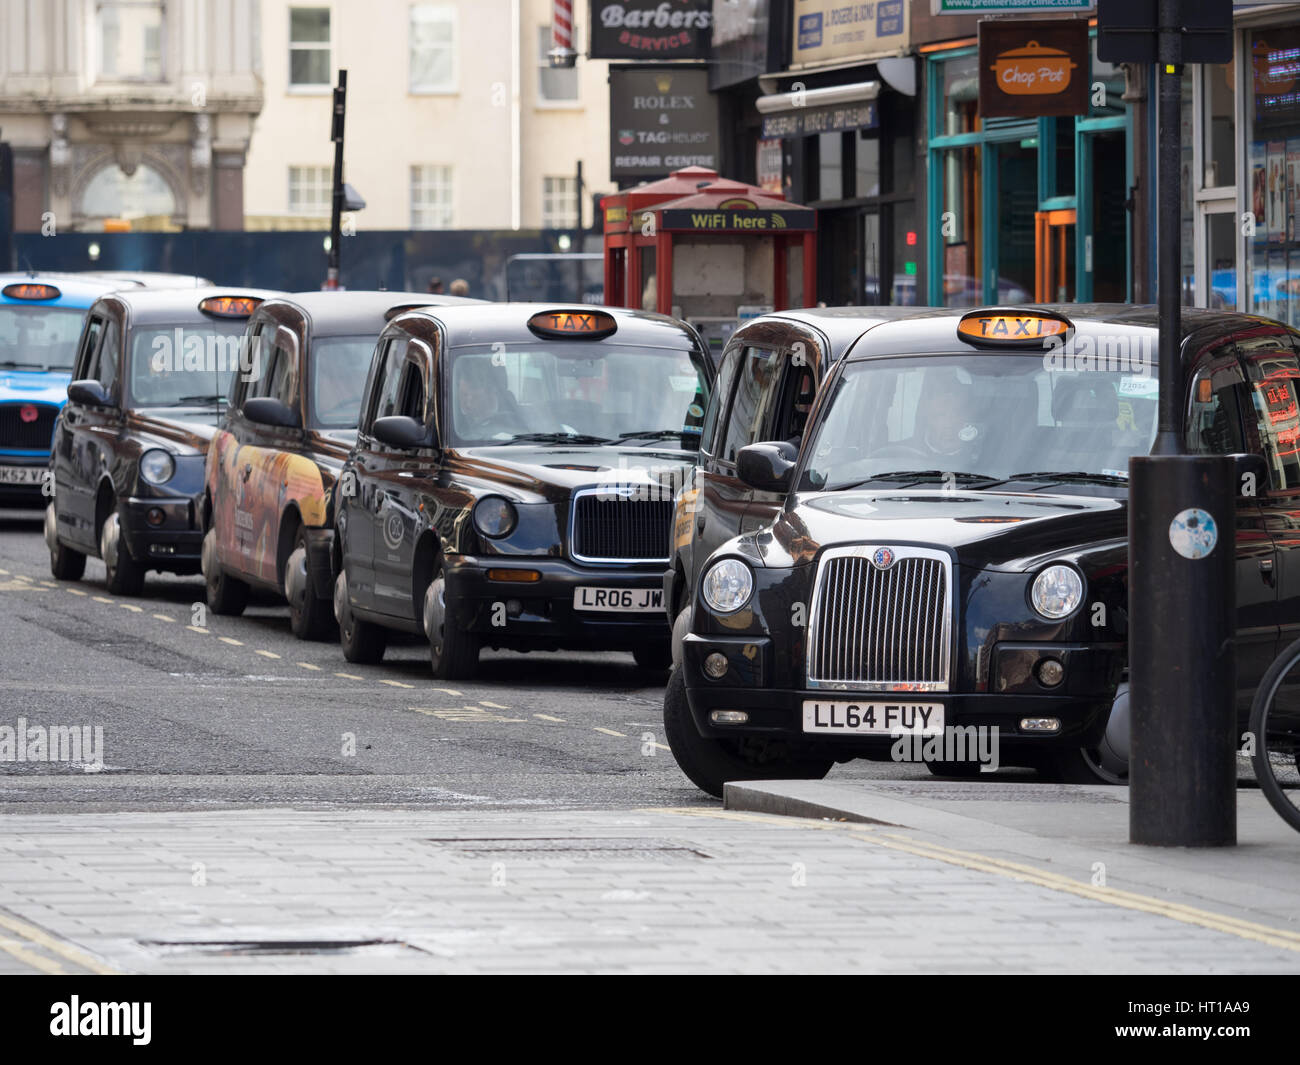 Londra taxi in coda per i clienti a Londra, Liverpool Street Stazione Ferroviaria Foto Stock